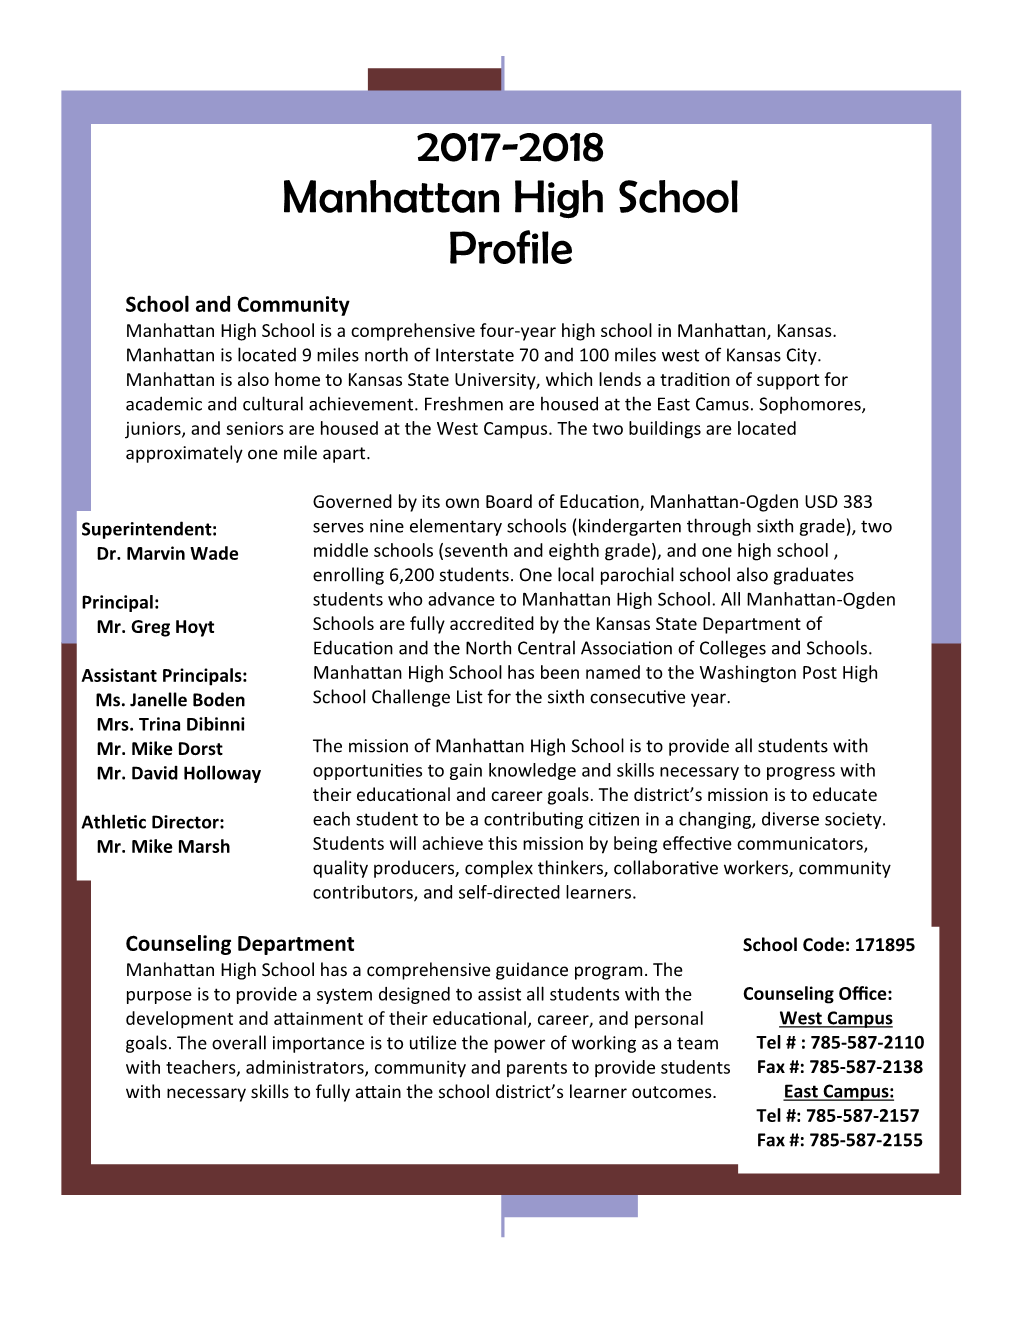 2017-2018 Manhattan High School Profile School and Community Manhattan High School Is a Comprehensive Four-Year High School in Manhattan, Kansas